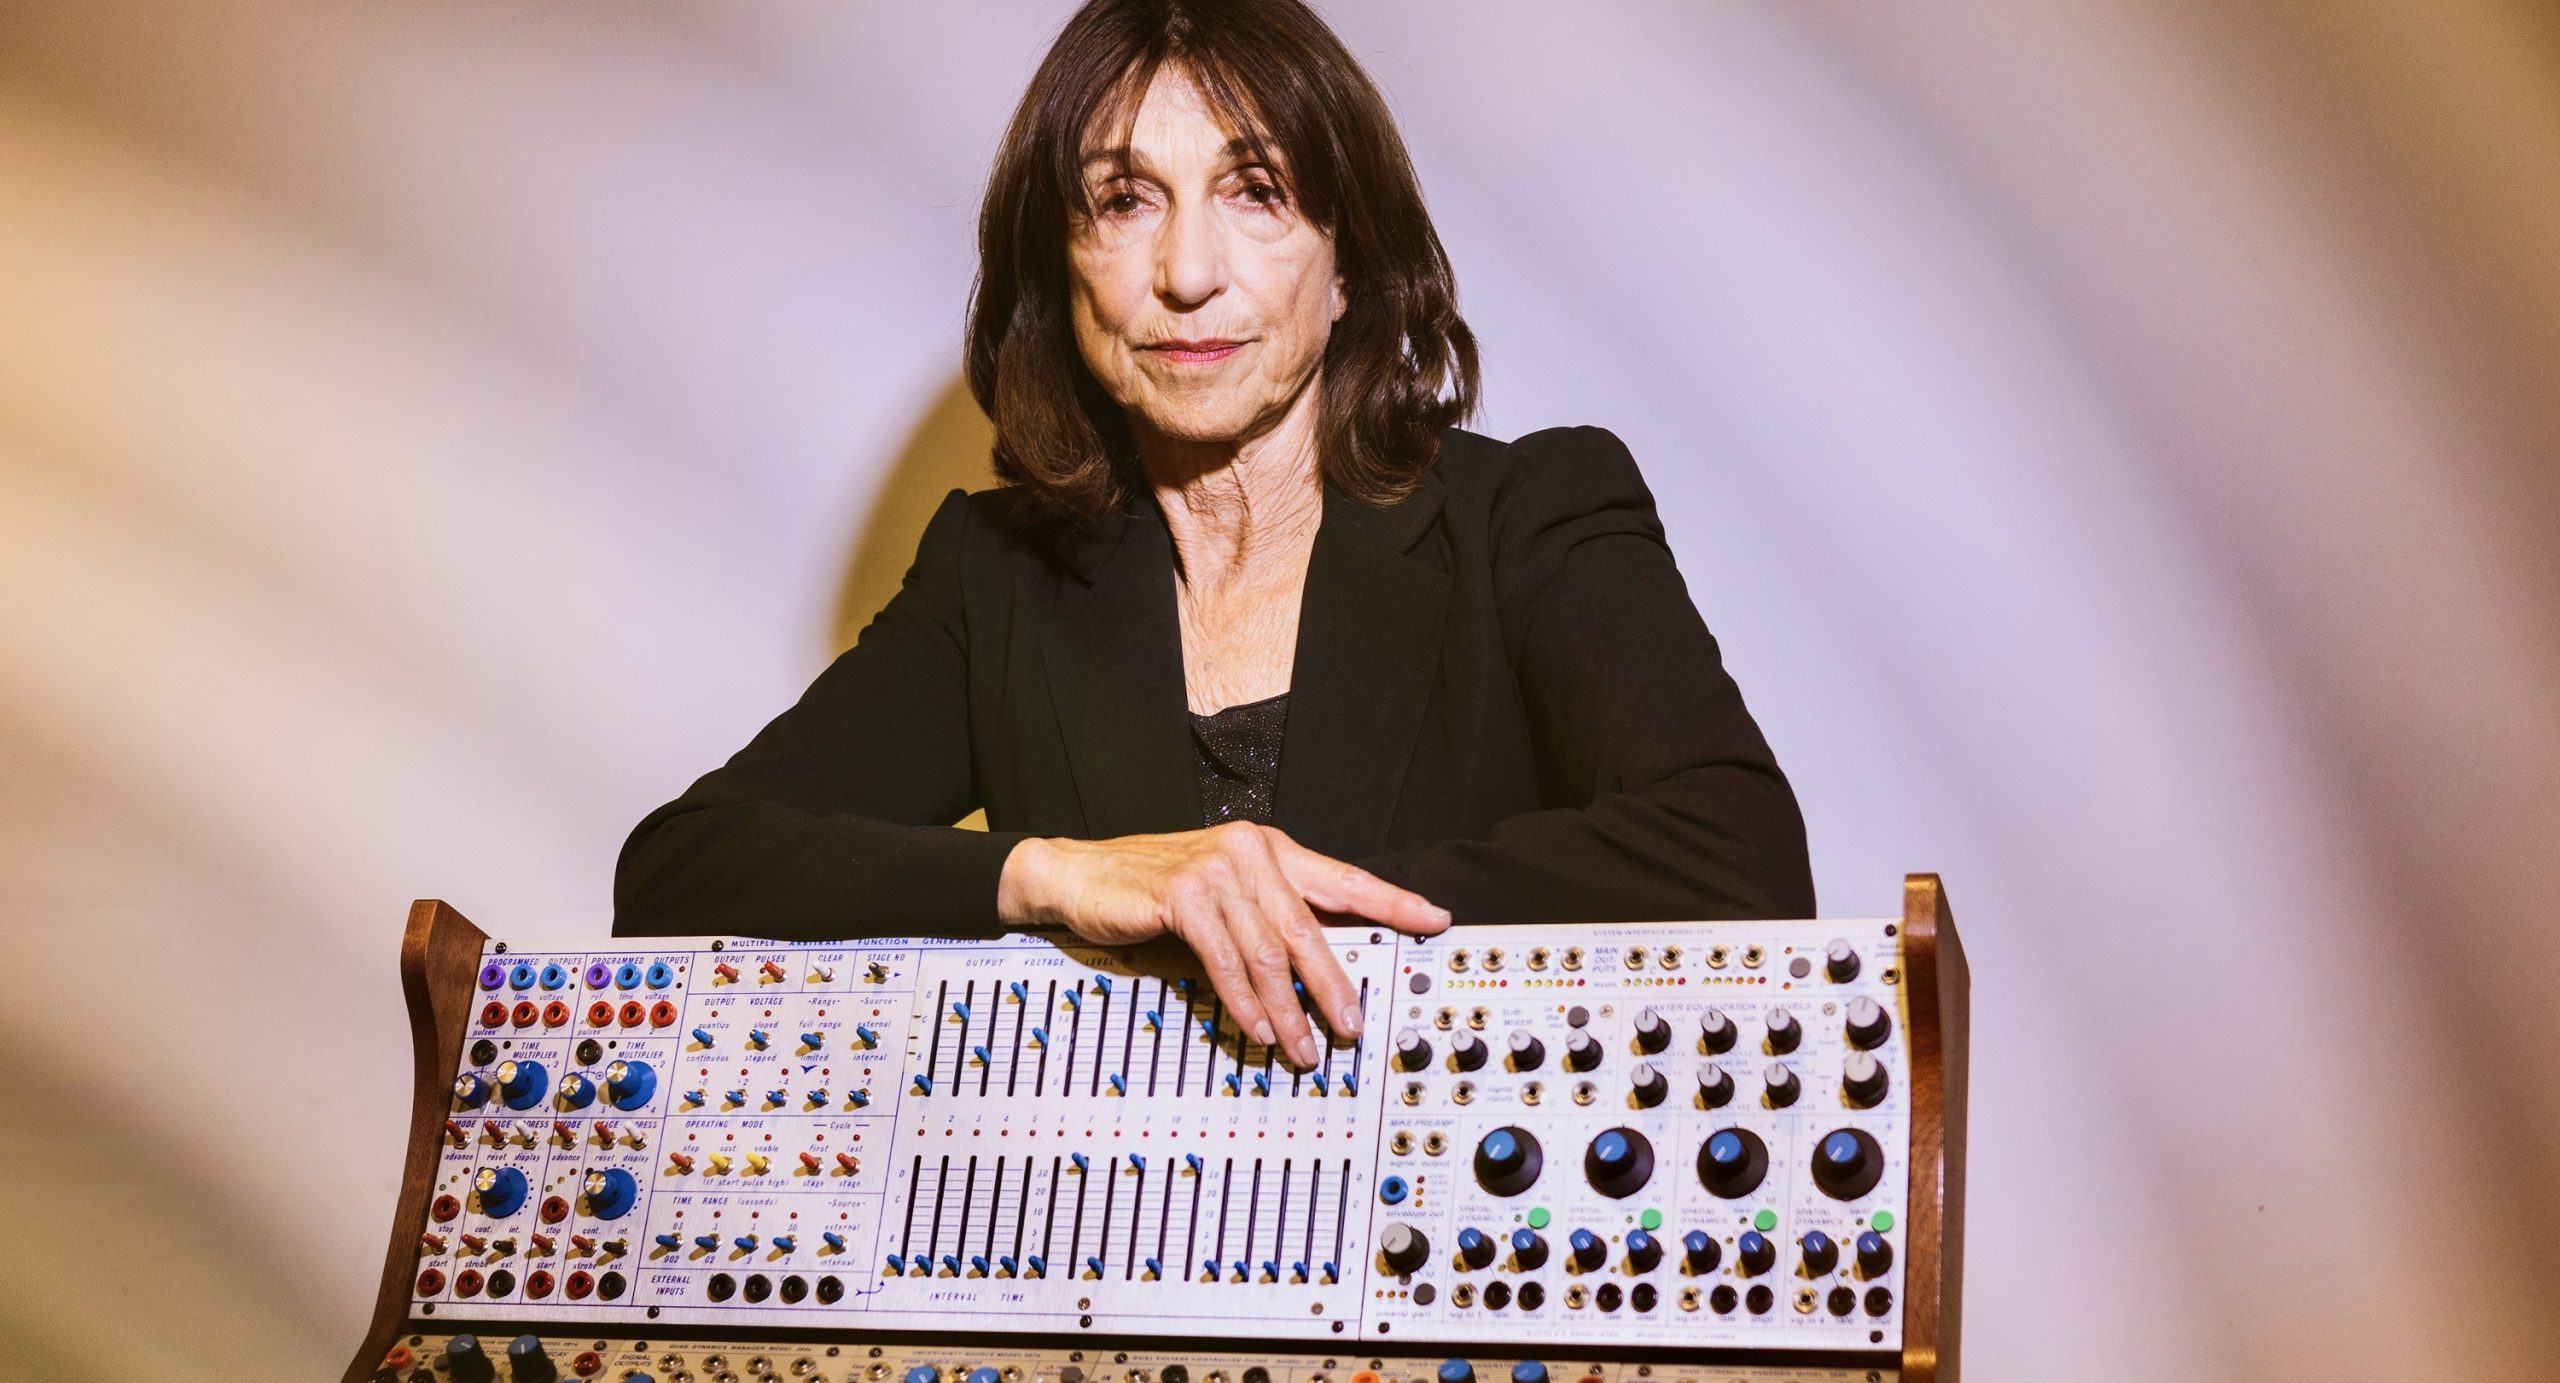 Microcosmos – Τη νέα σειρά συναυλιών του ΚΠΙΣΝ εγκαινιάζει η Suzanne Ciani  στις 23 Οκτωβρίου 2022